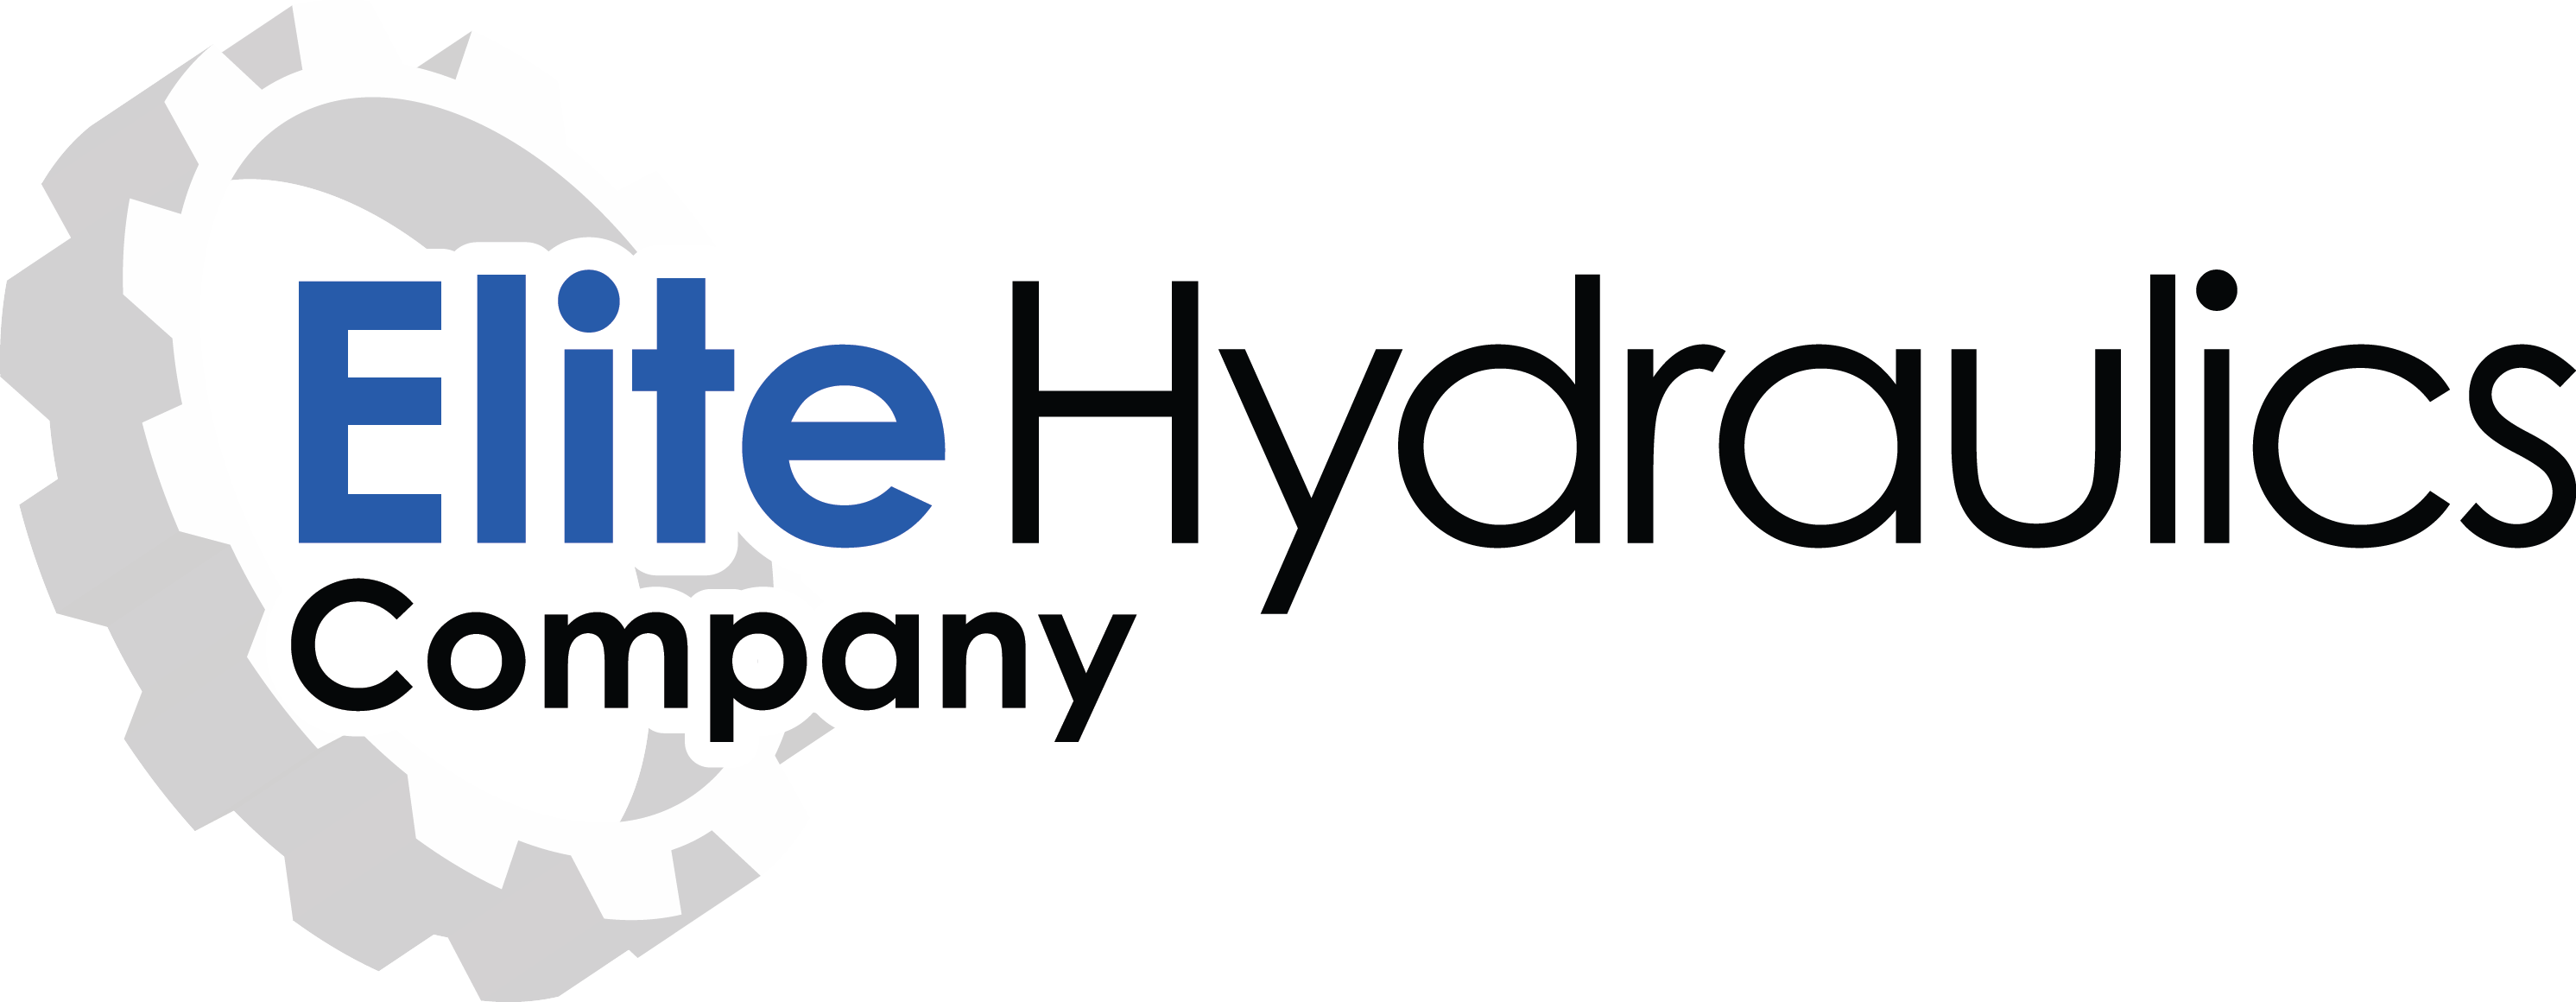 Hydraulics Logo - Elite Hydraulics | Services